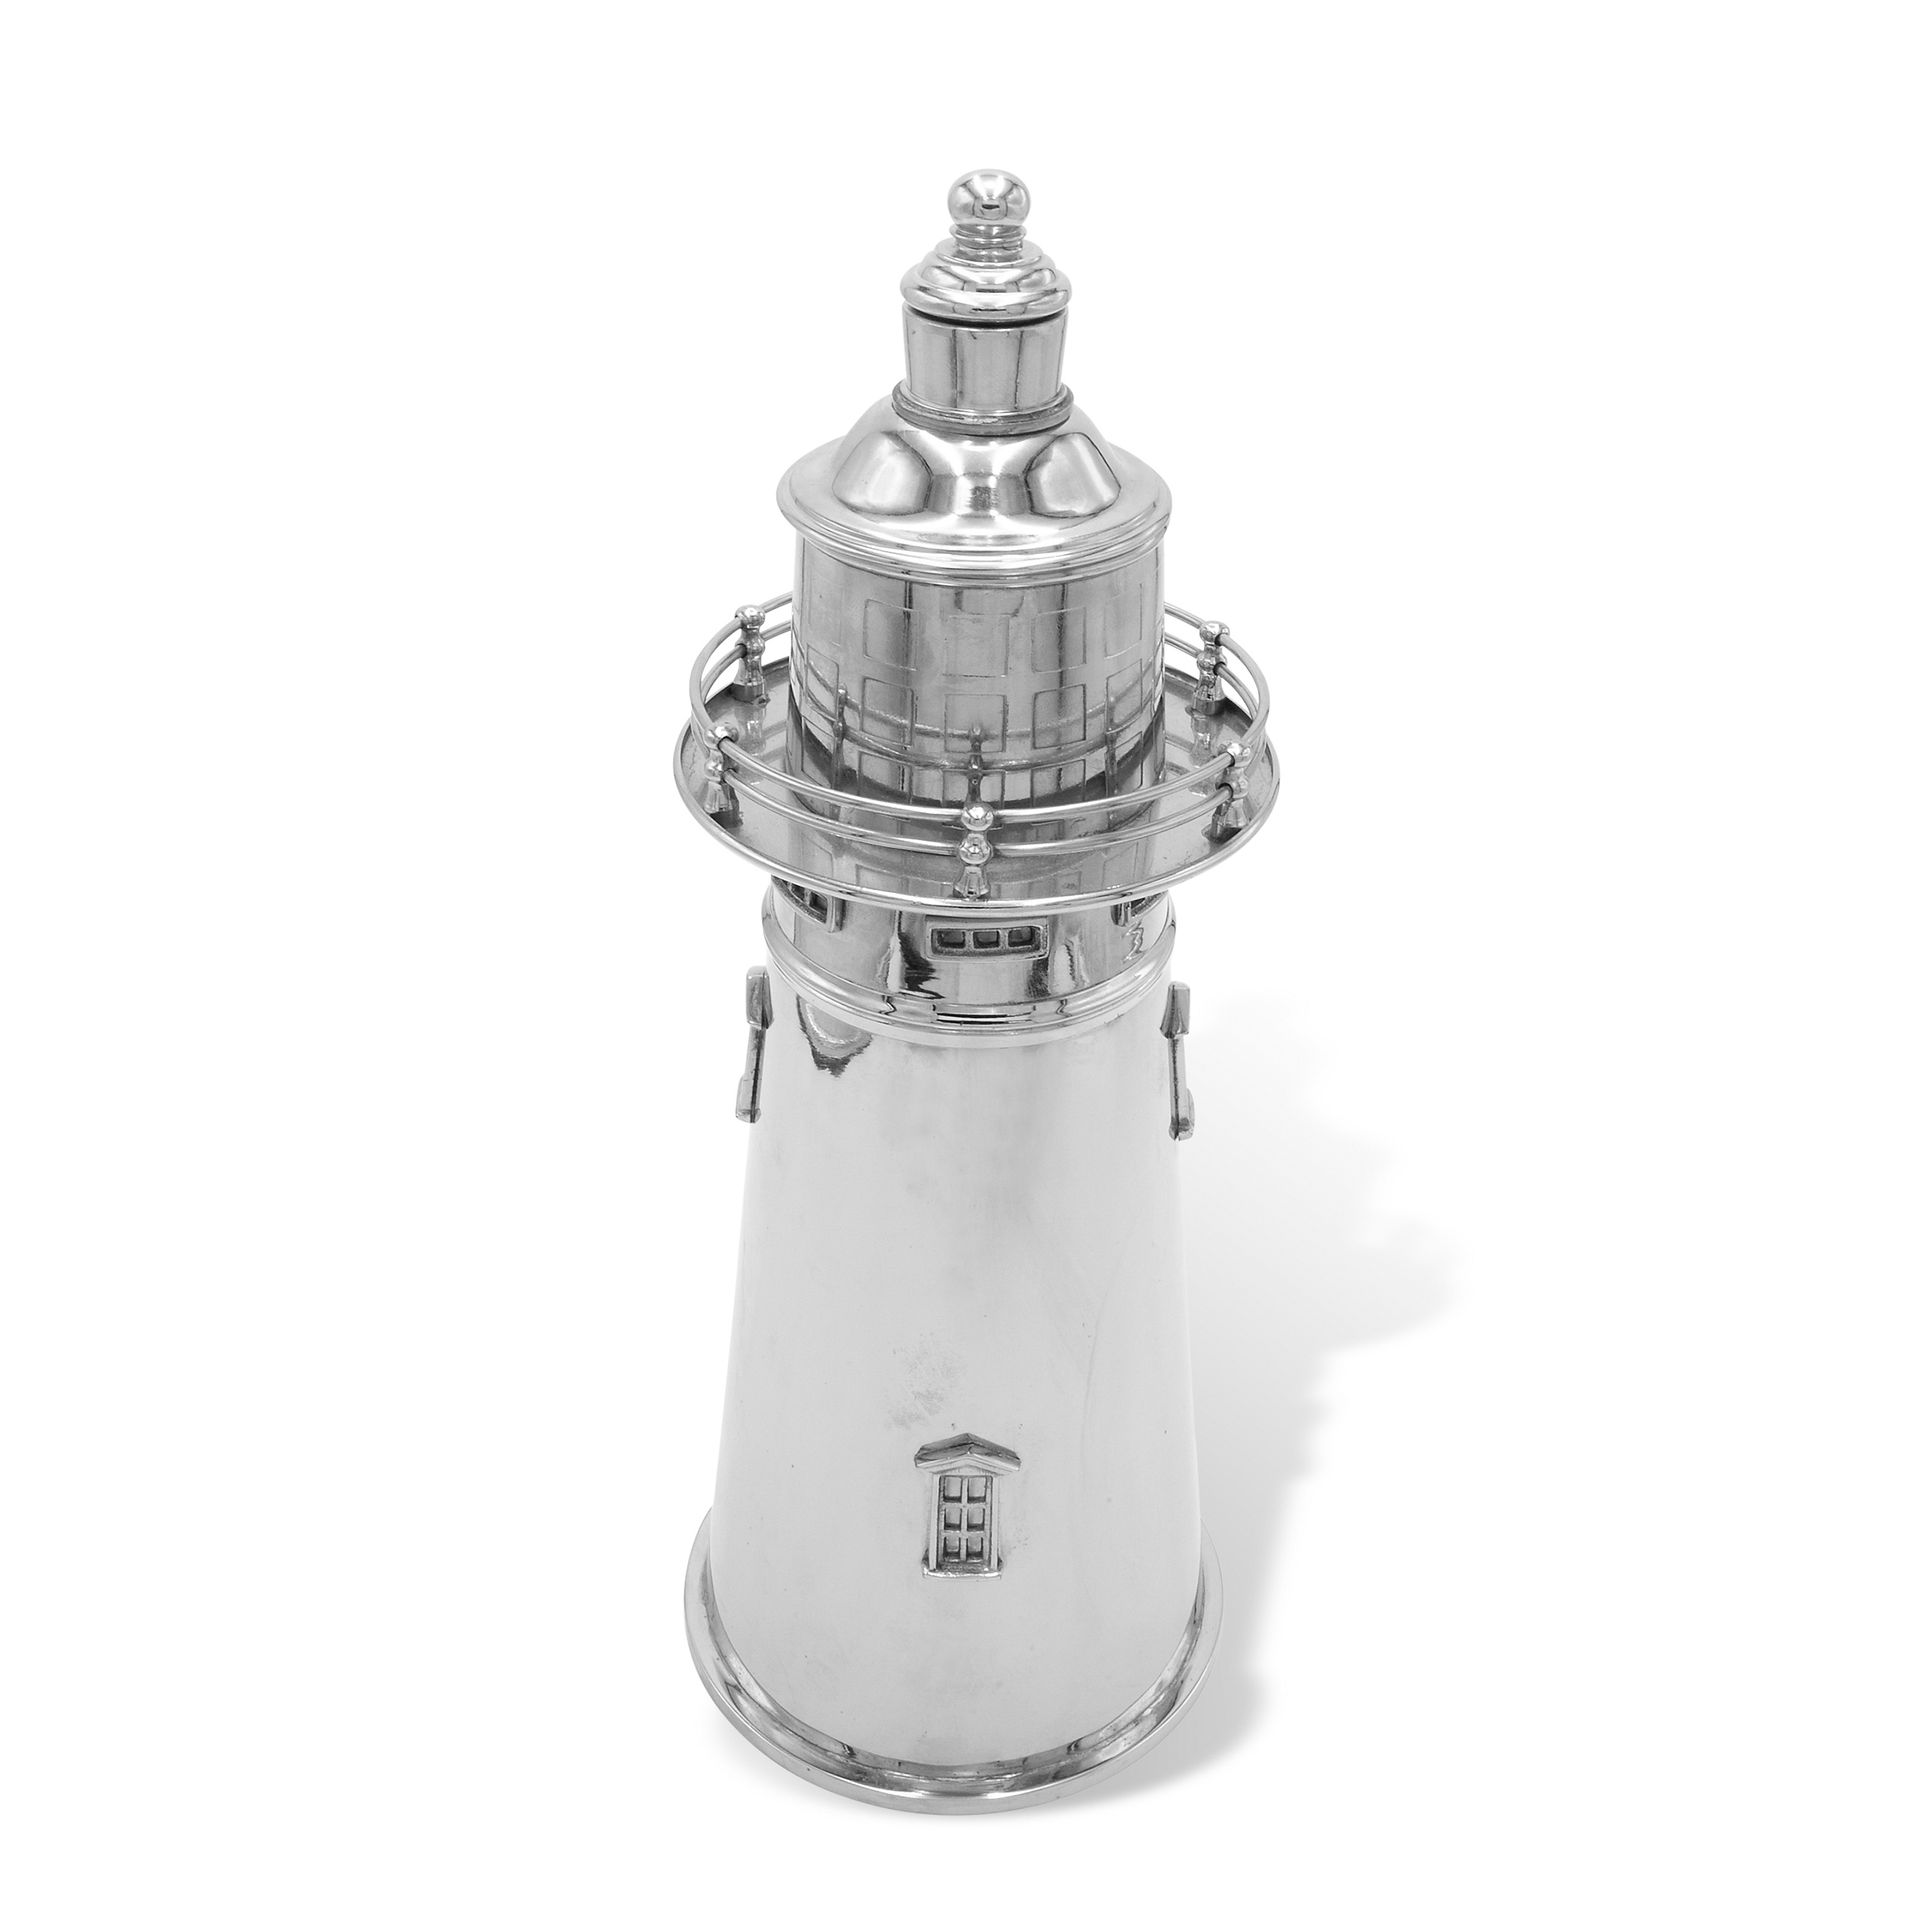 Important lighthouse-shaped cocktail shaker 完全由镀铬金属制造，底部标有0273号尺寸28.7x5.1英寸。